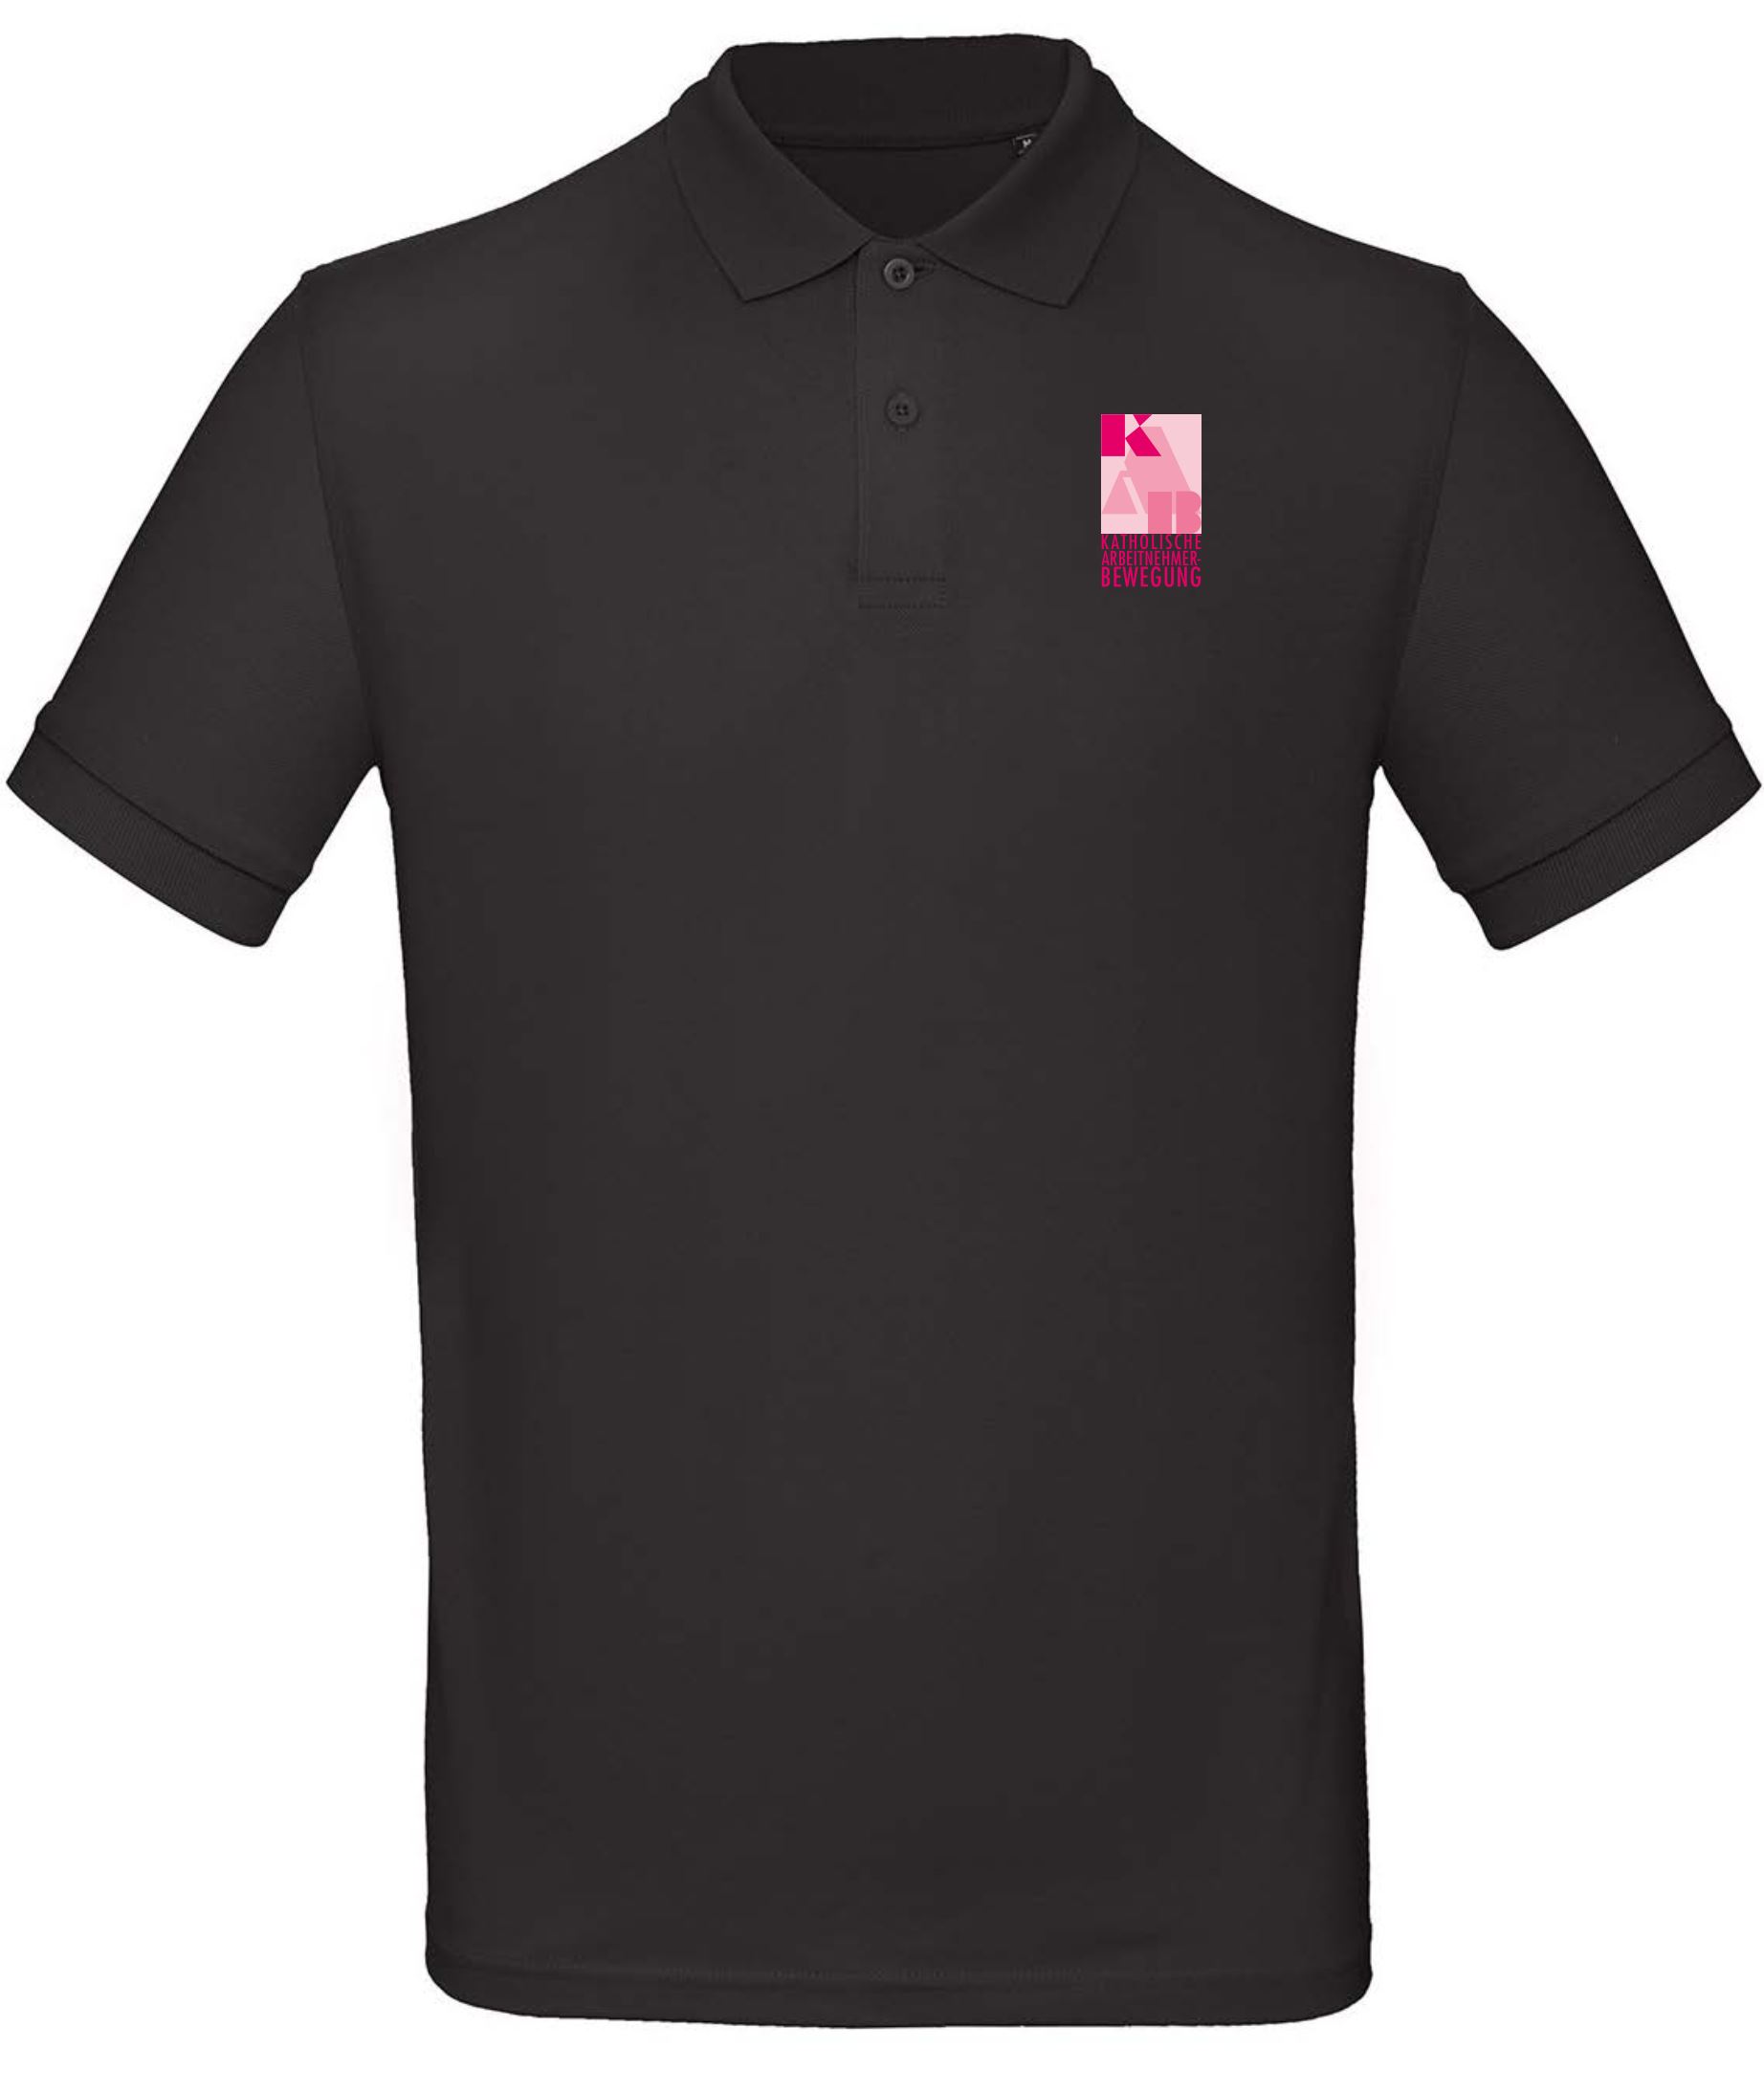 KAB Kampagnen-Kurzarm-Poloshirt schwarz unisex Gr. L